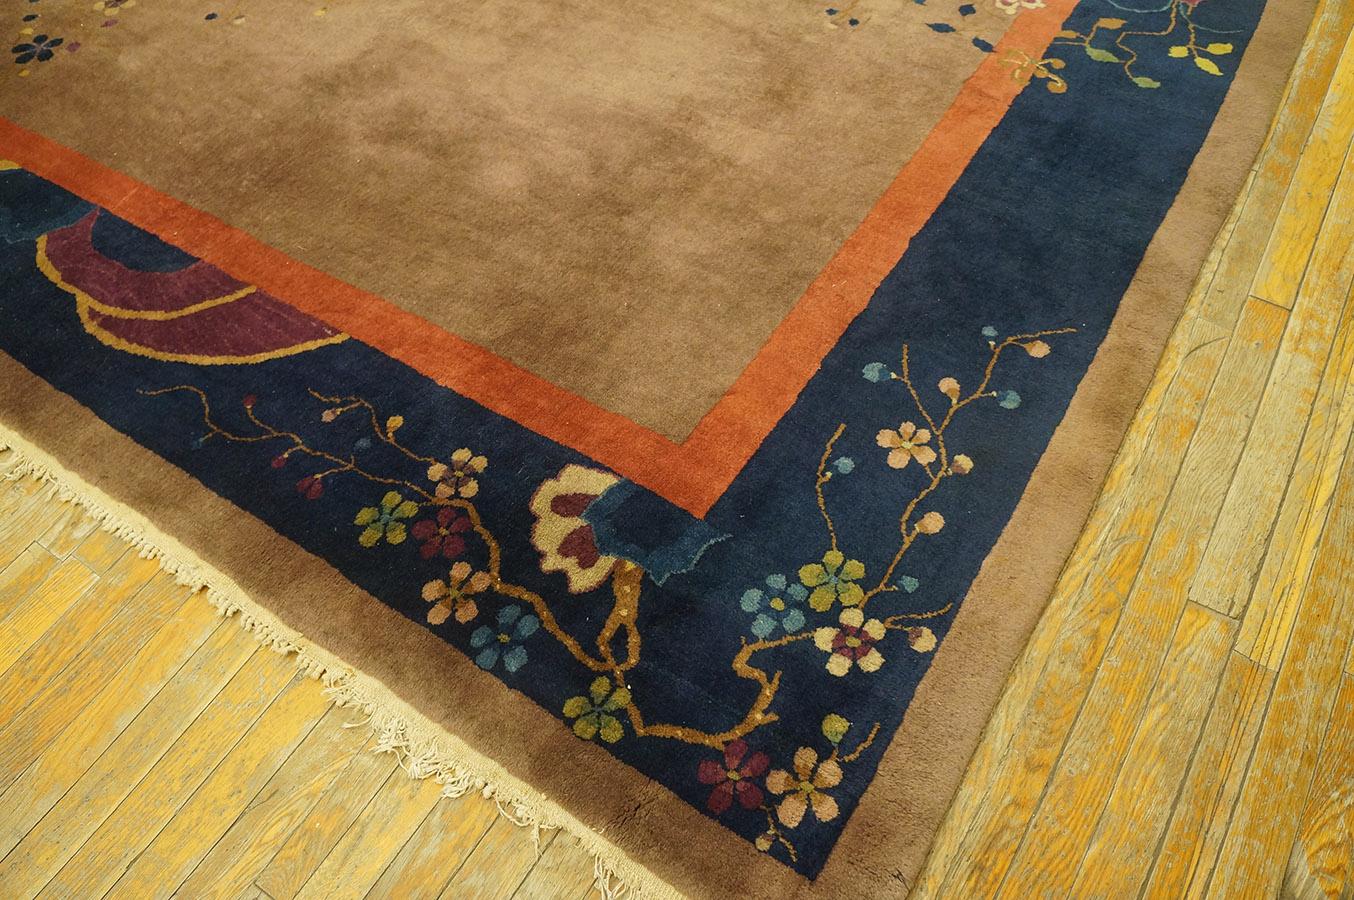 1920s Chinese Art Deco Carpet ( 9' x 12' - 275 x 365 cm ) For Sale 3